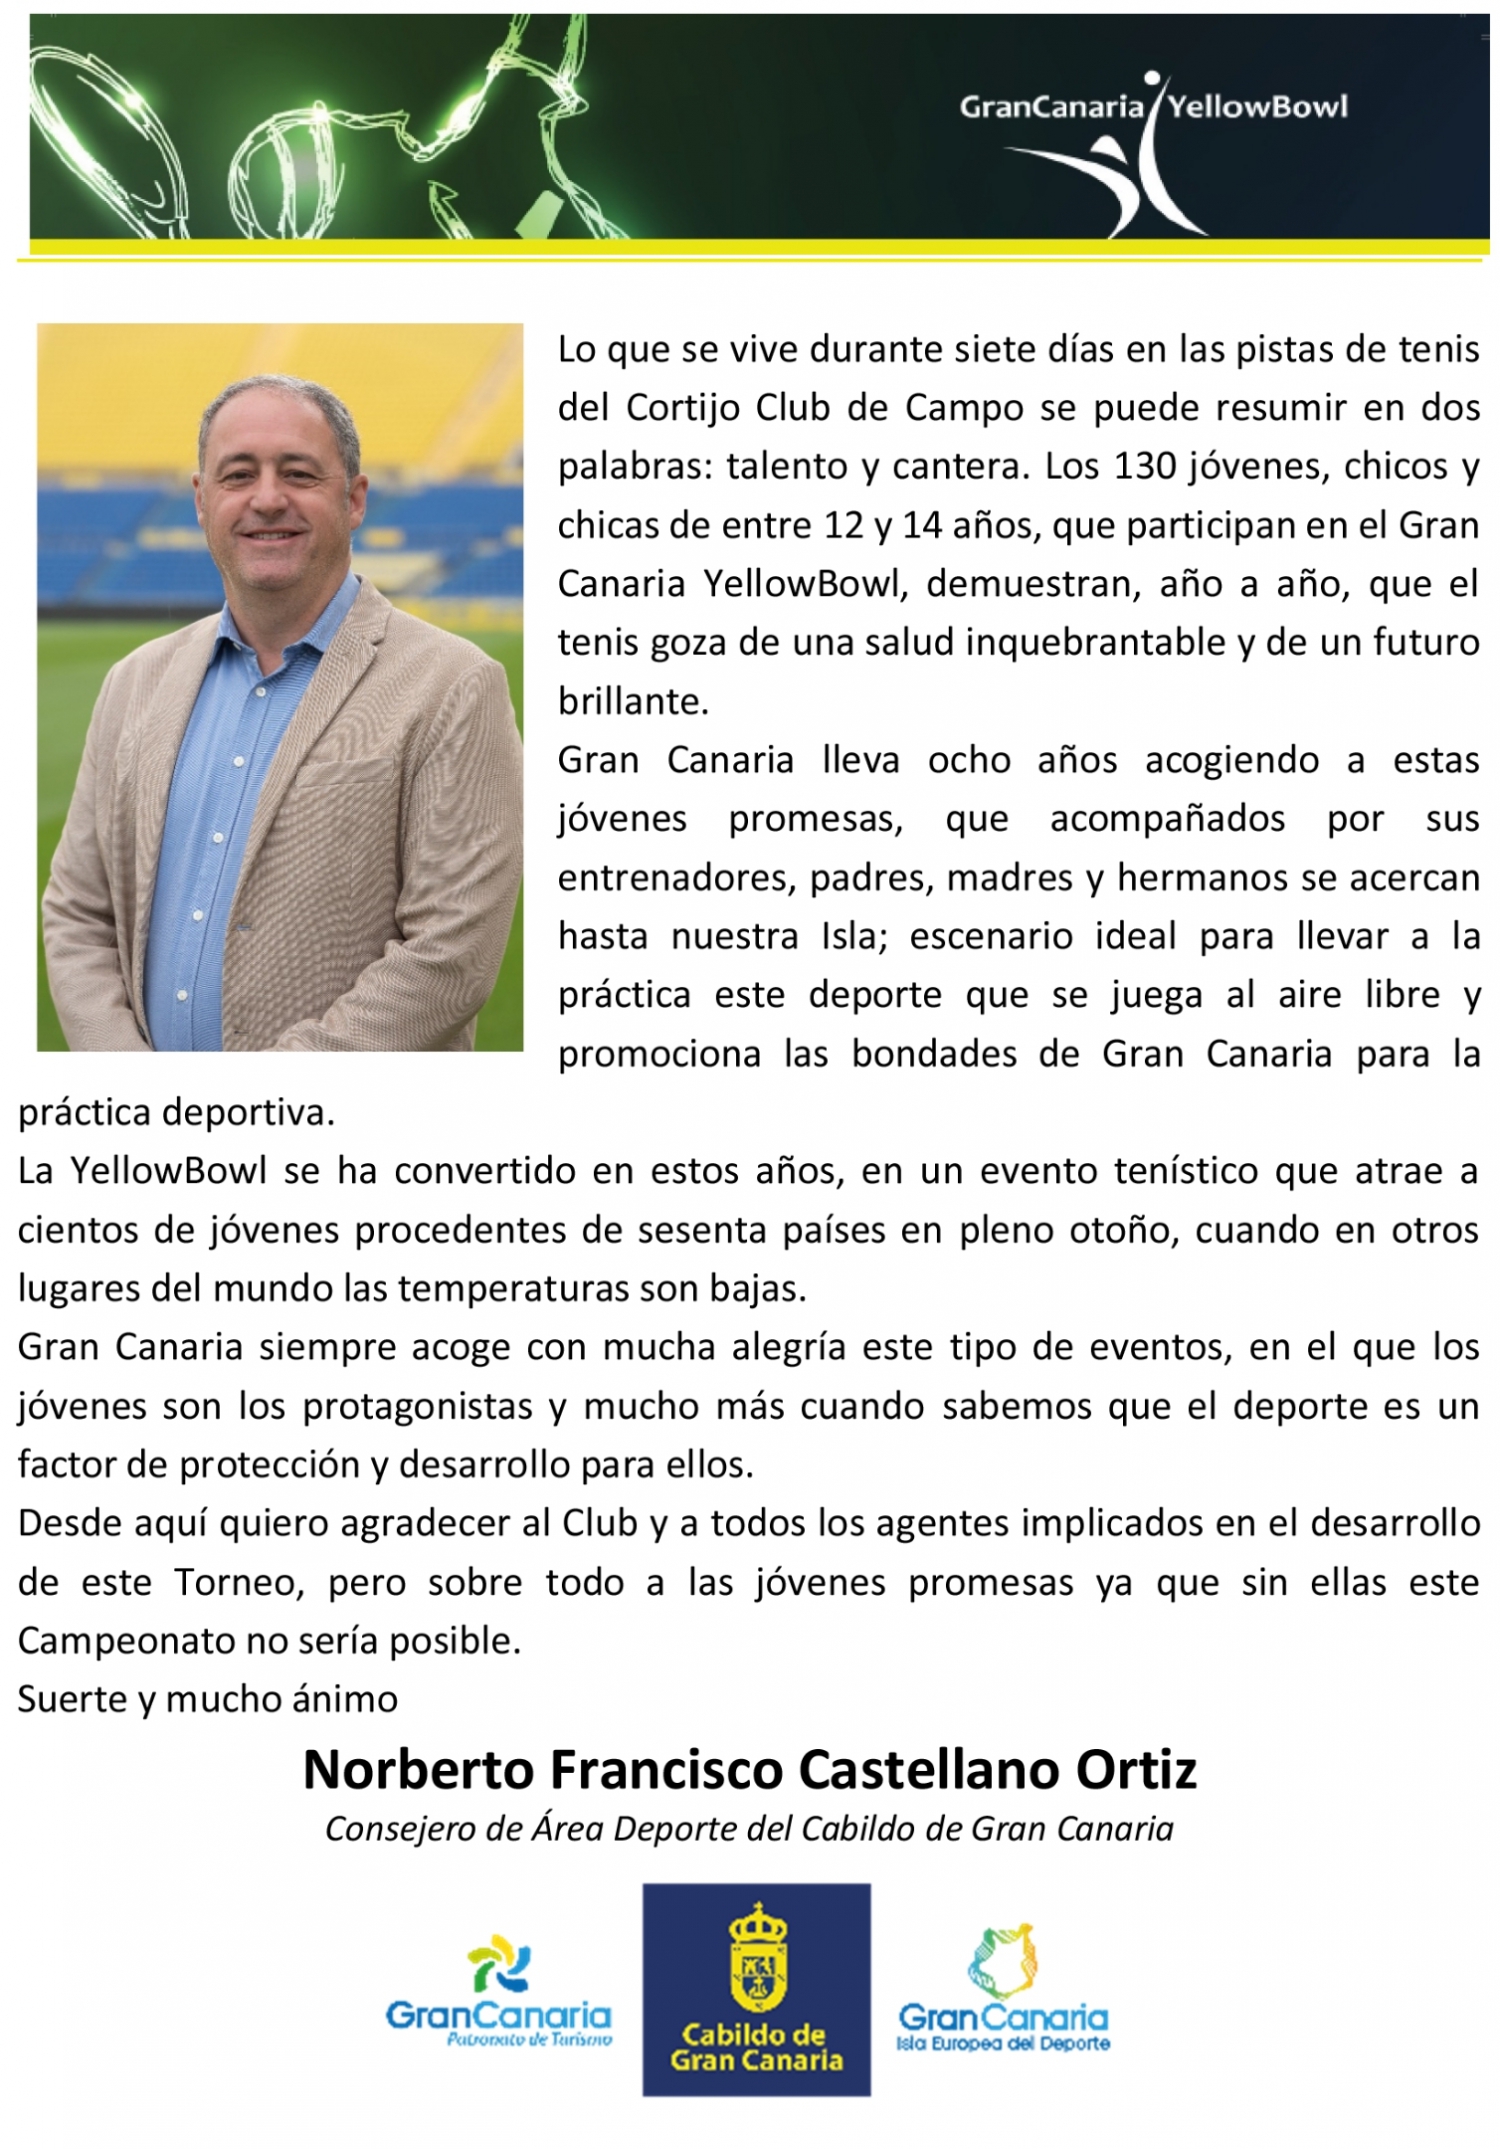 N. Francisco Castellano Ortiz / Cabildo de Gran Canaria